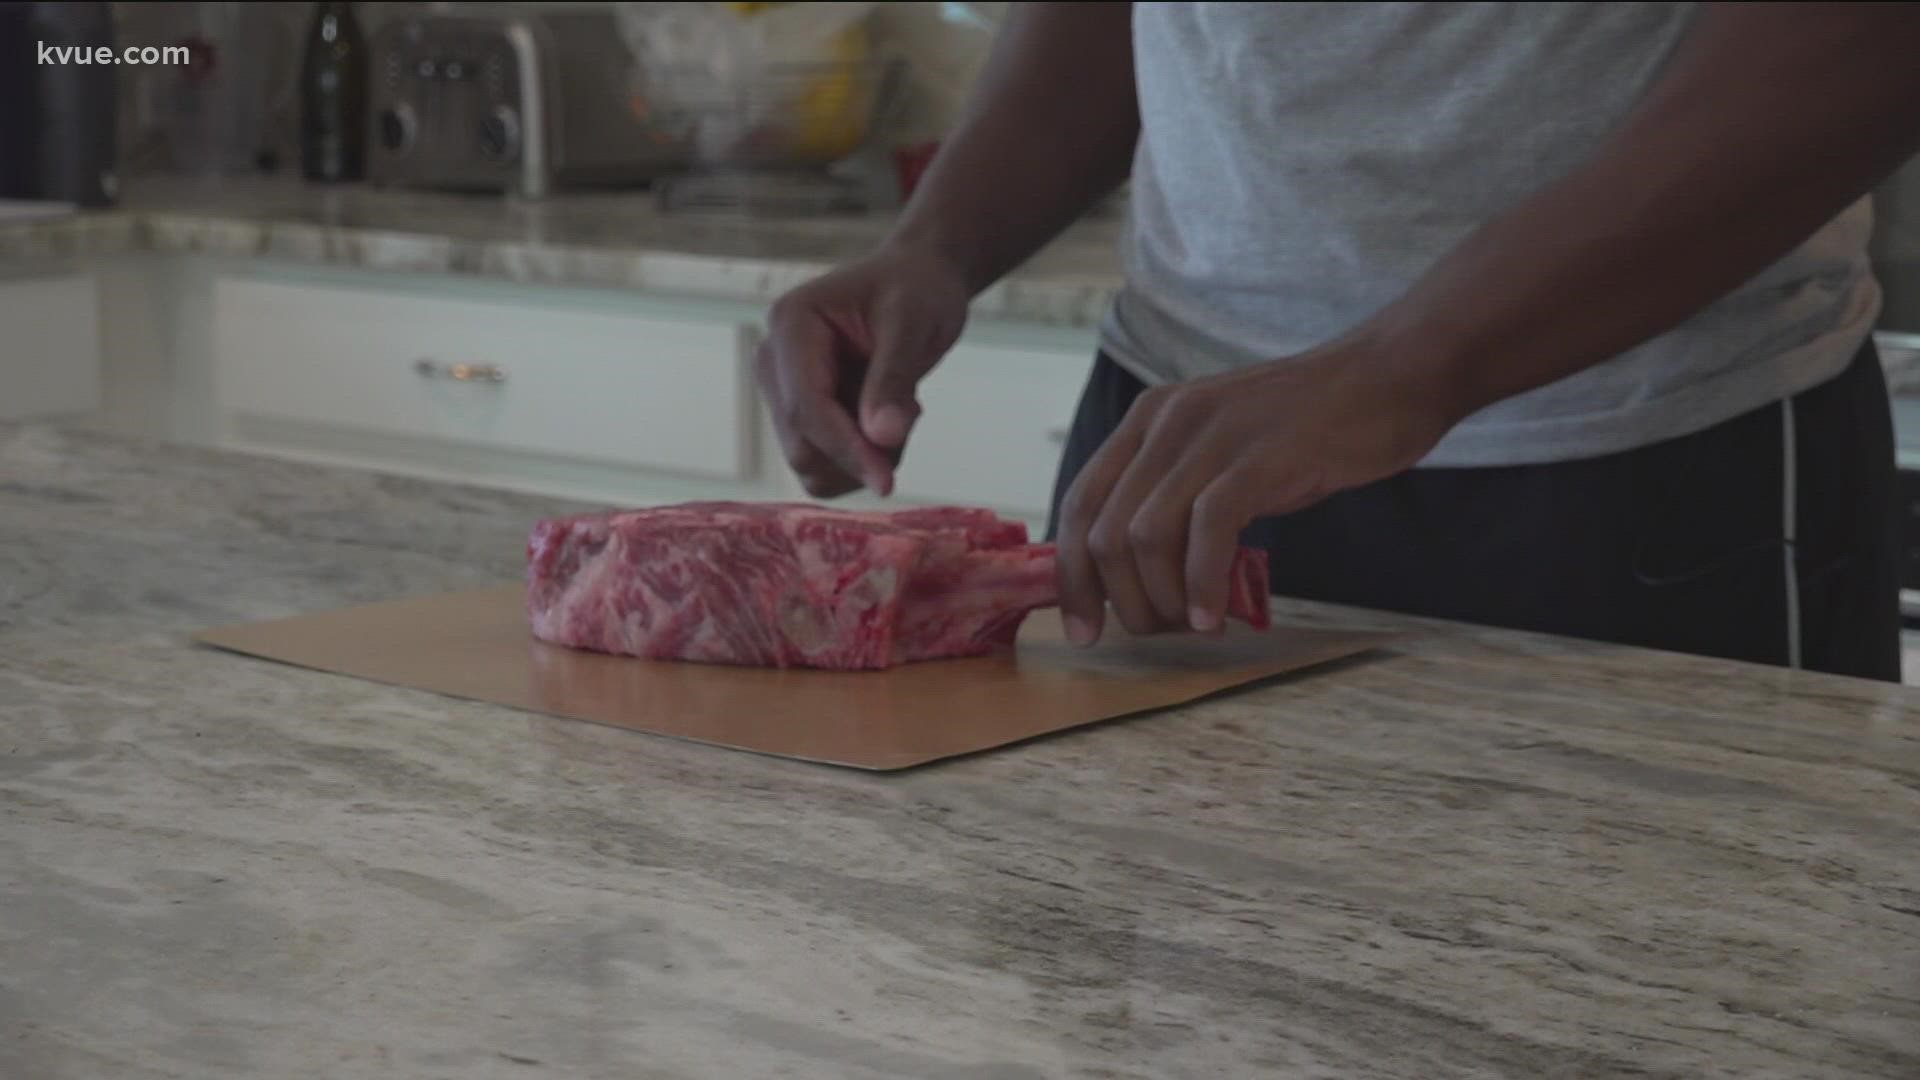 Master the most impressive steak around!